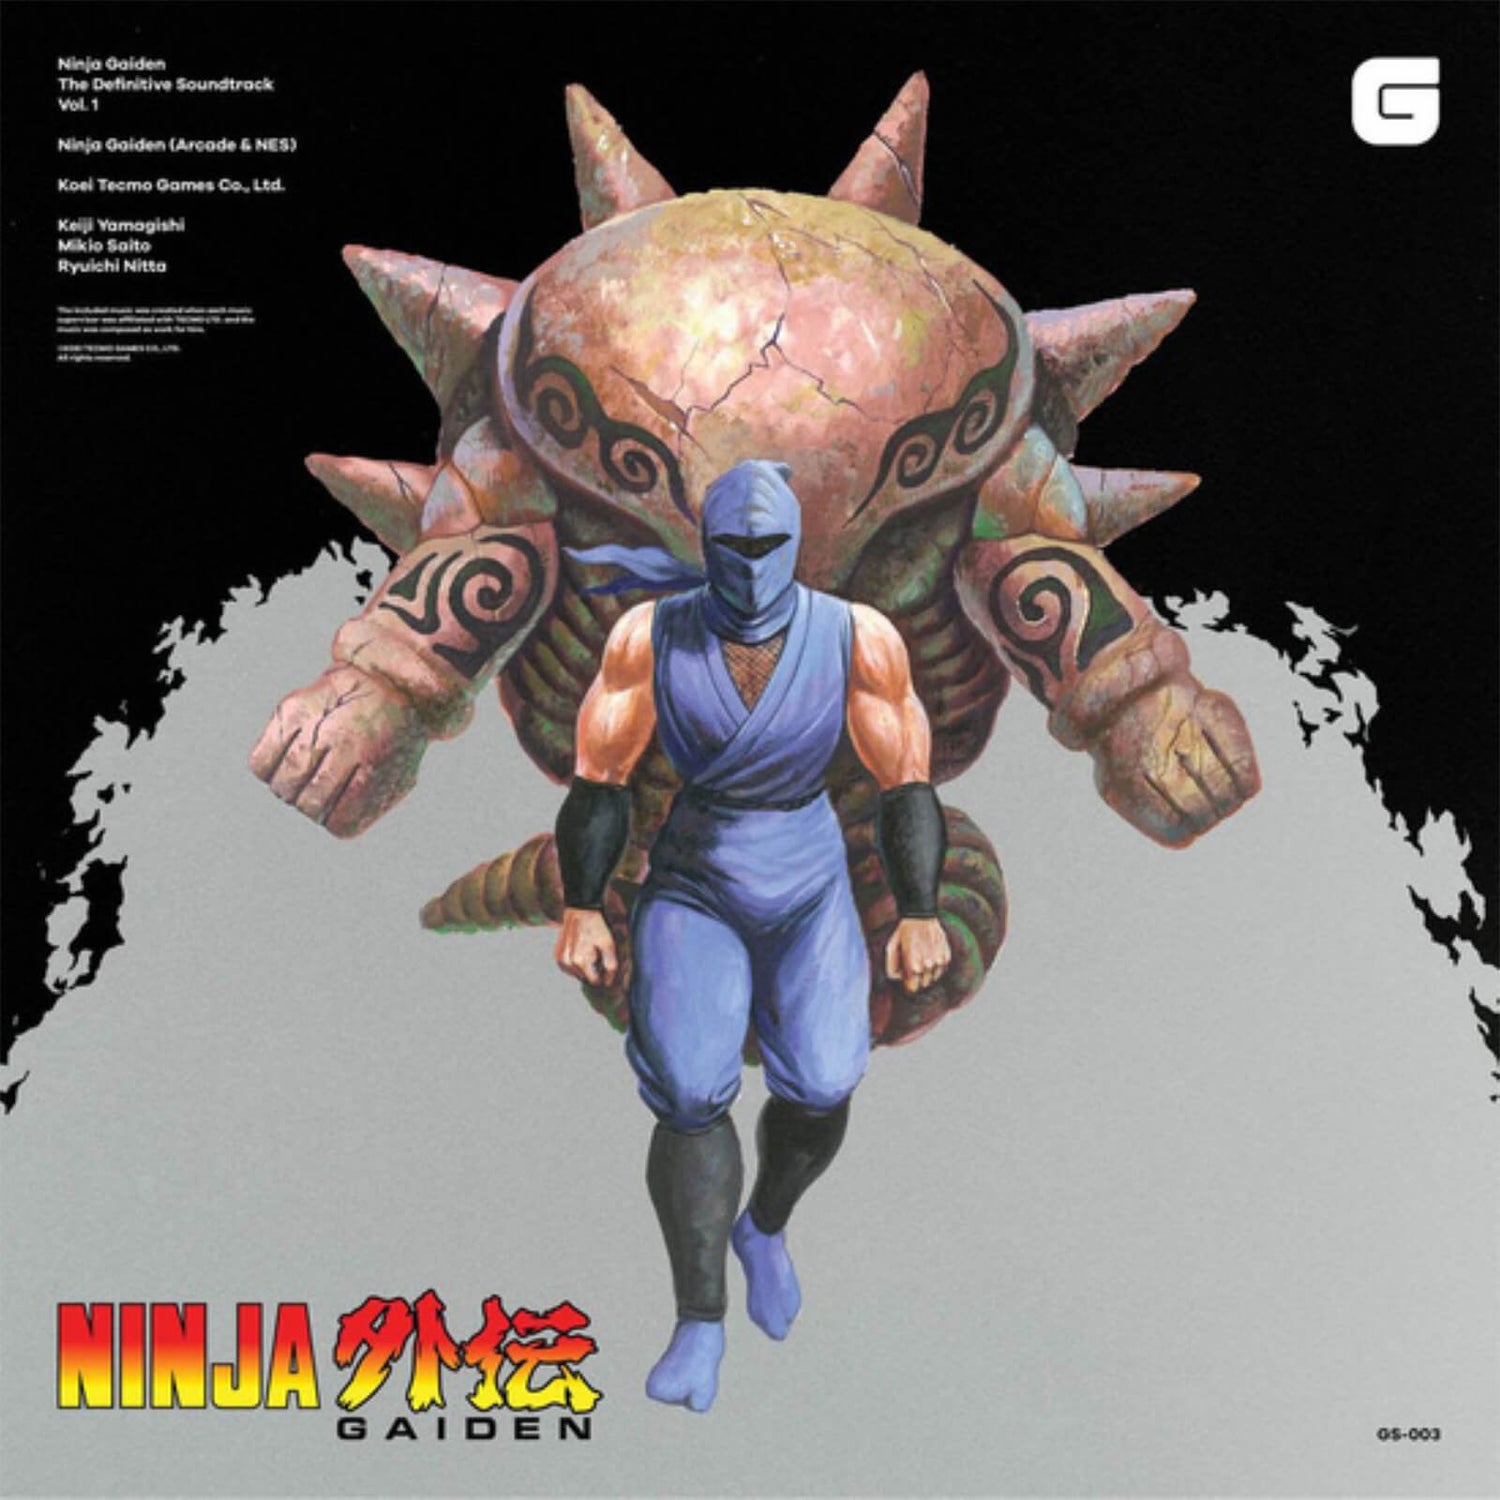 Brave Wave - Ninja Gaiden (The Definitive Soundtrack, Vol. 1) 2xLP